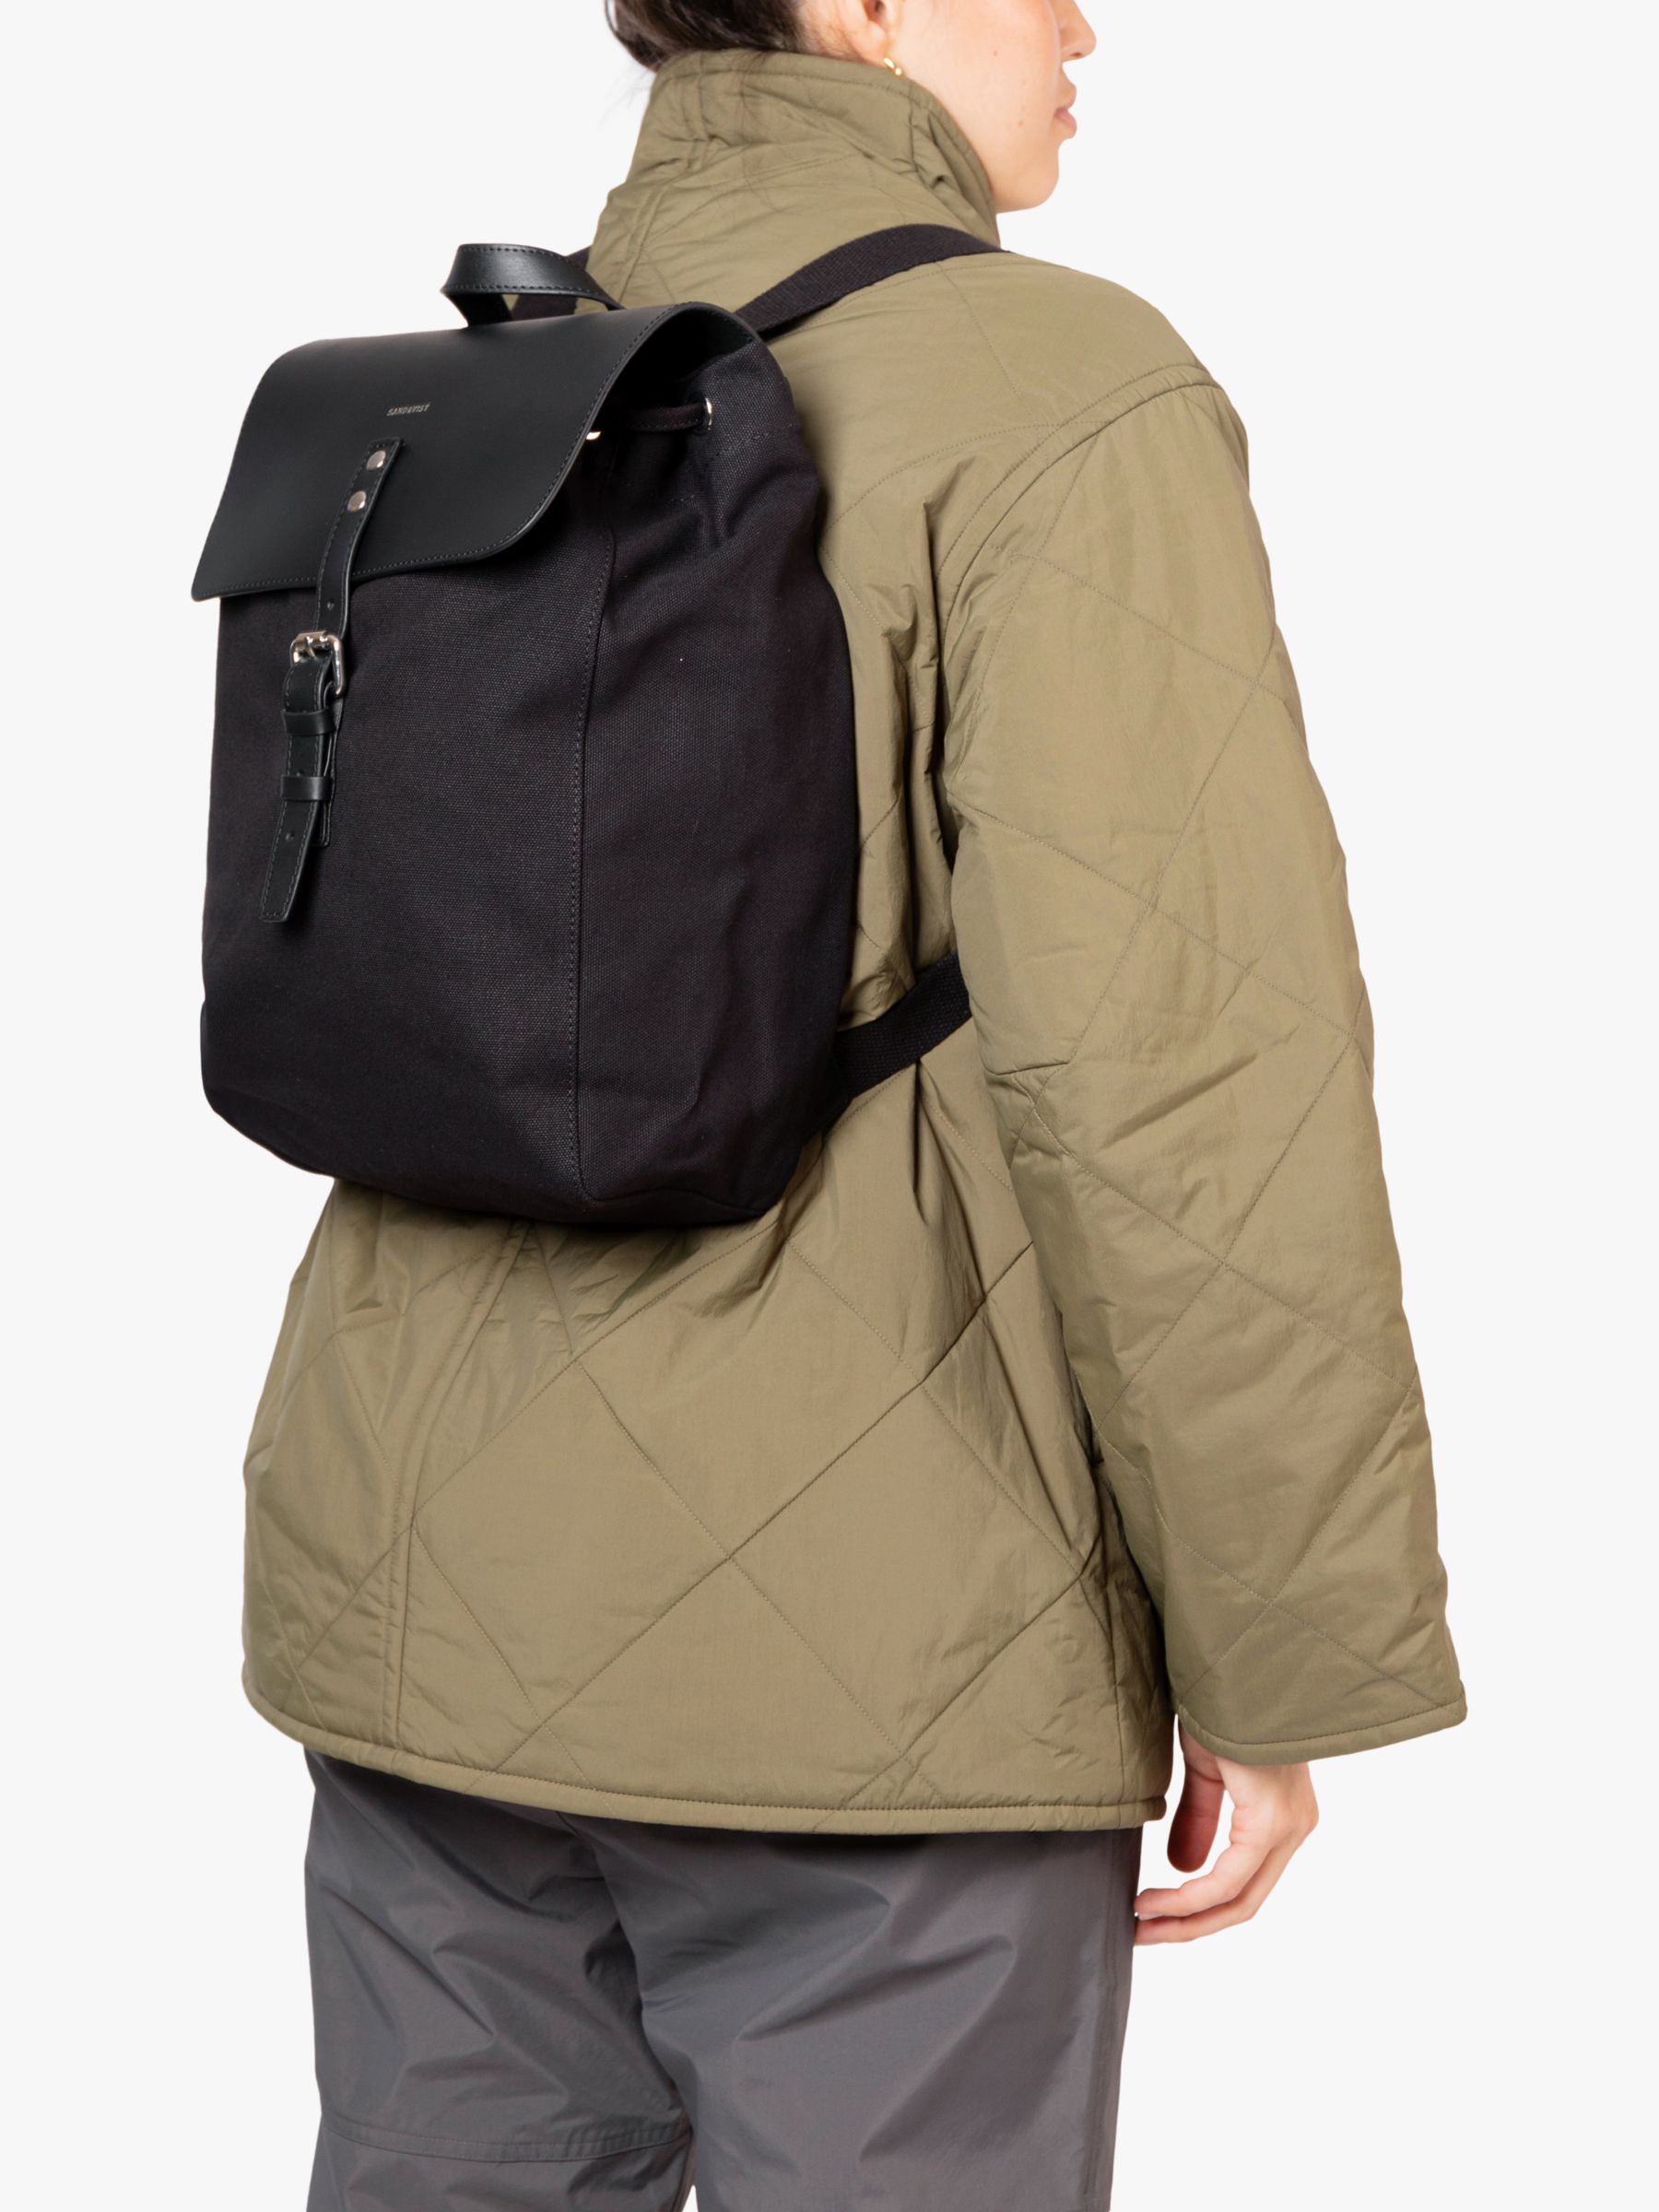 Sandqvist Alva Black Backpack  Black backpack, Urban outfitters, Backpacks